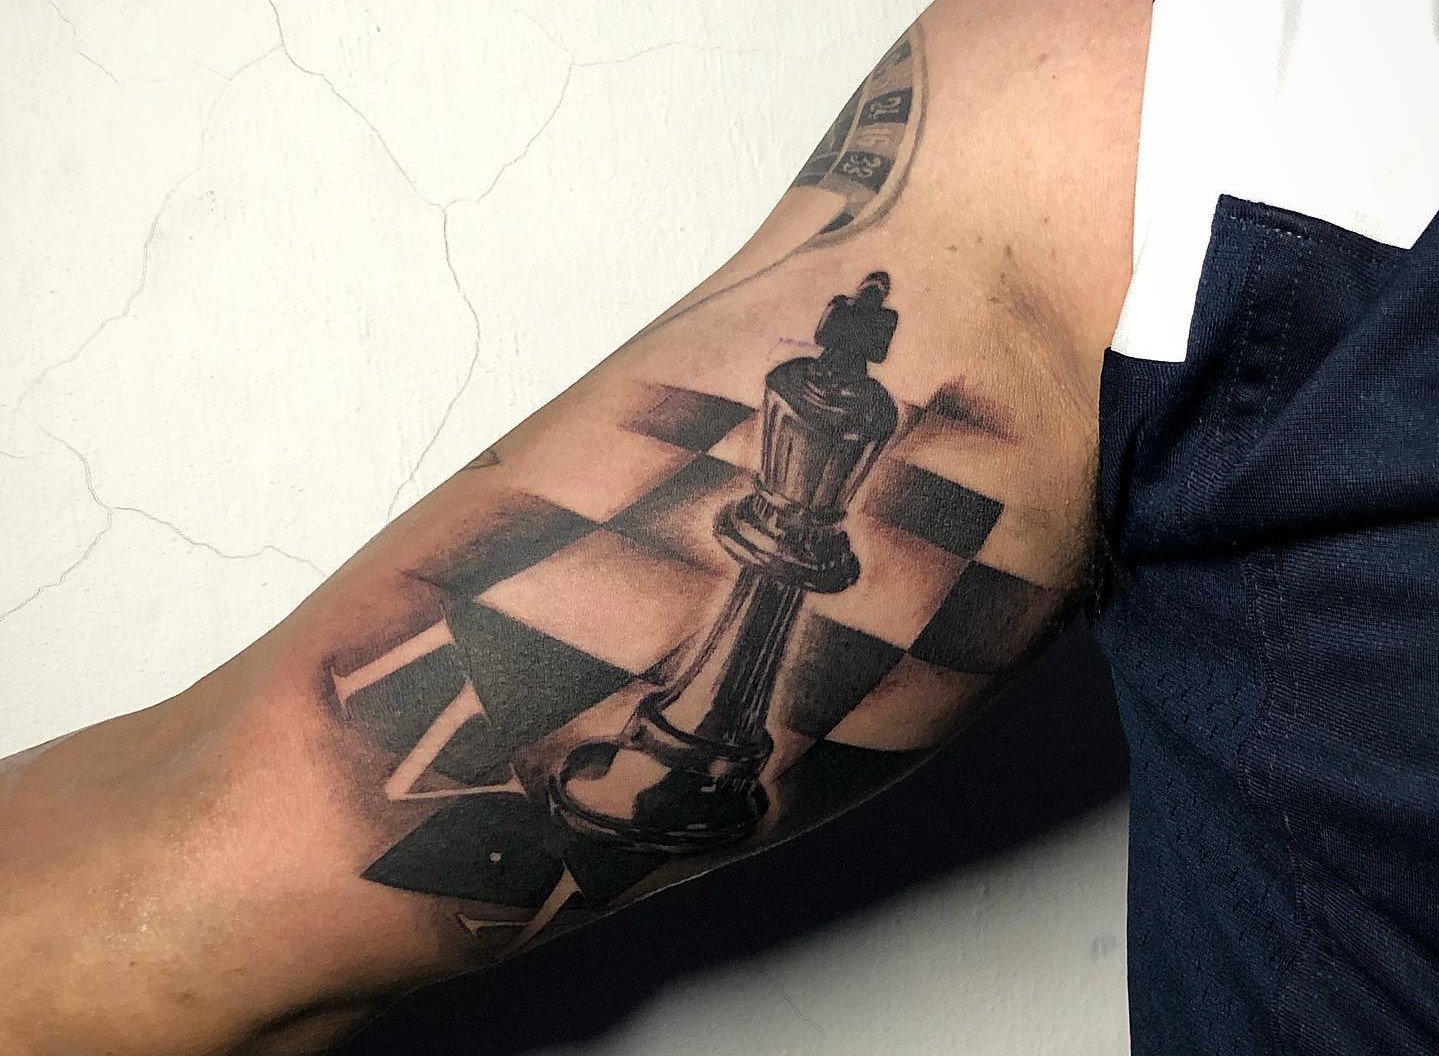 chess tattoo sleeve